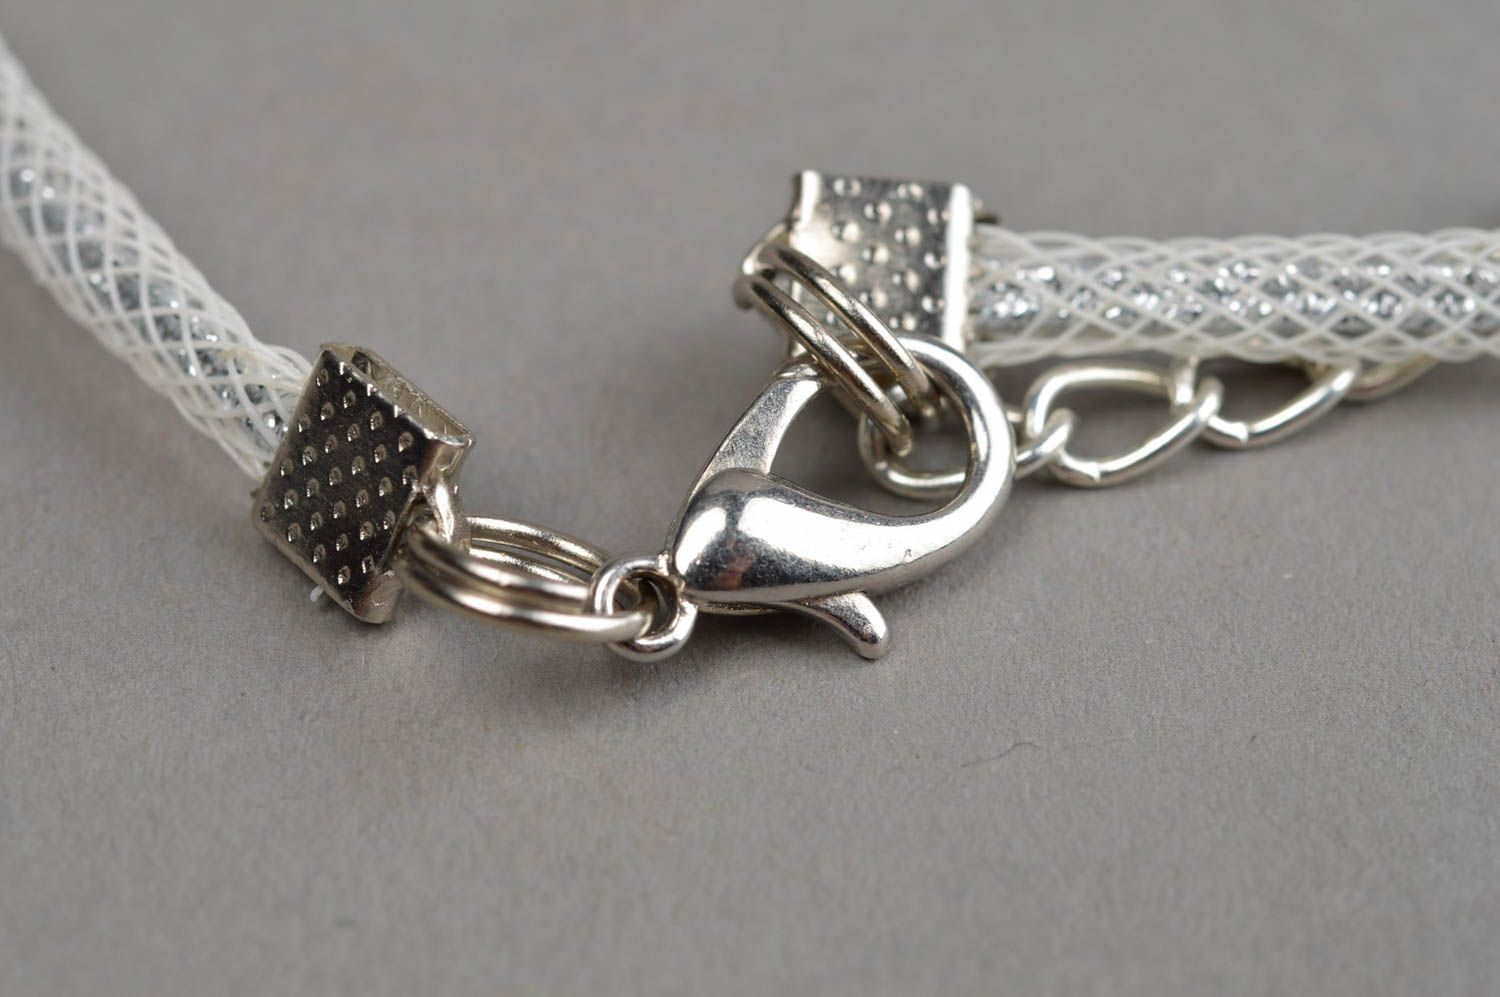 Handmade beautiful pendant soutache unusual accessory cute stylish jewelry photo 4